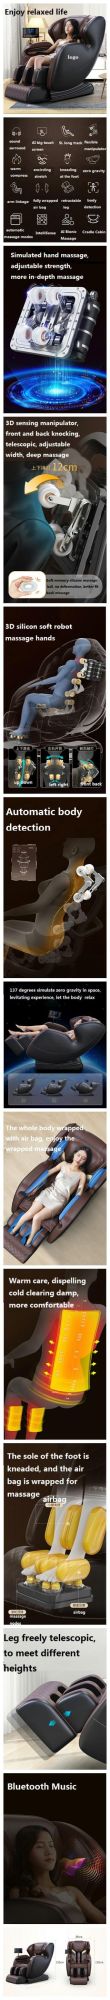 Sauron C200 Multi-Function Health Acupressure Roller Full Body Massage Chair Zero Gravity